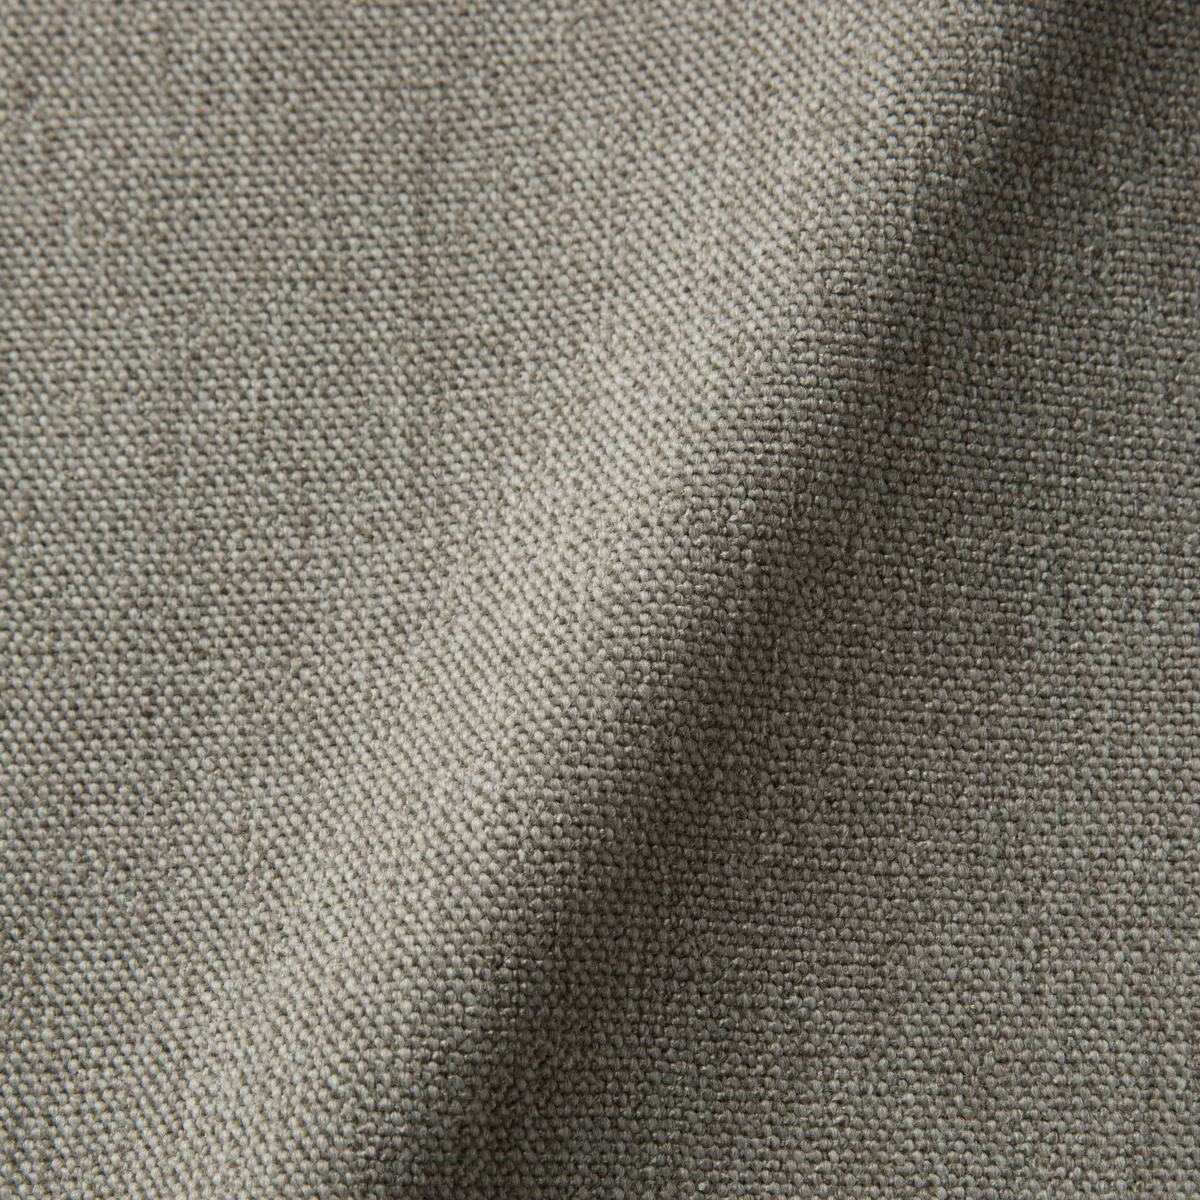 Fabric sample Justo Muse brown